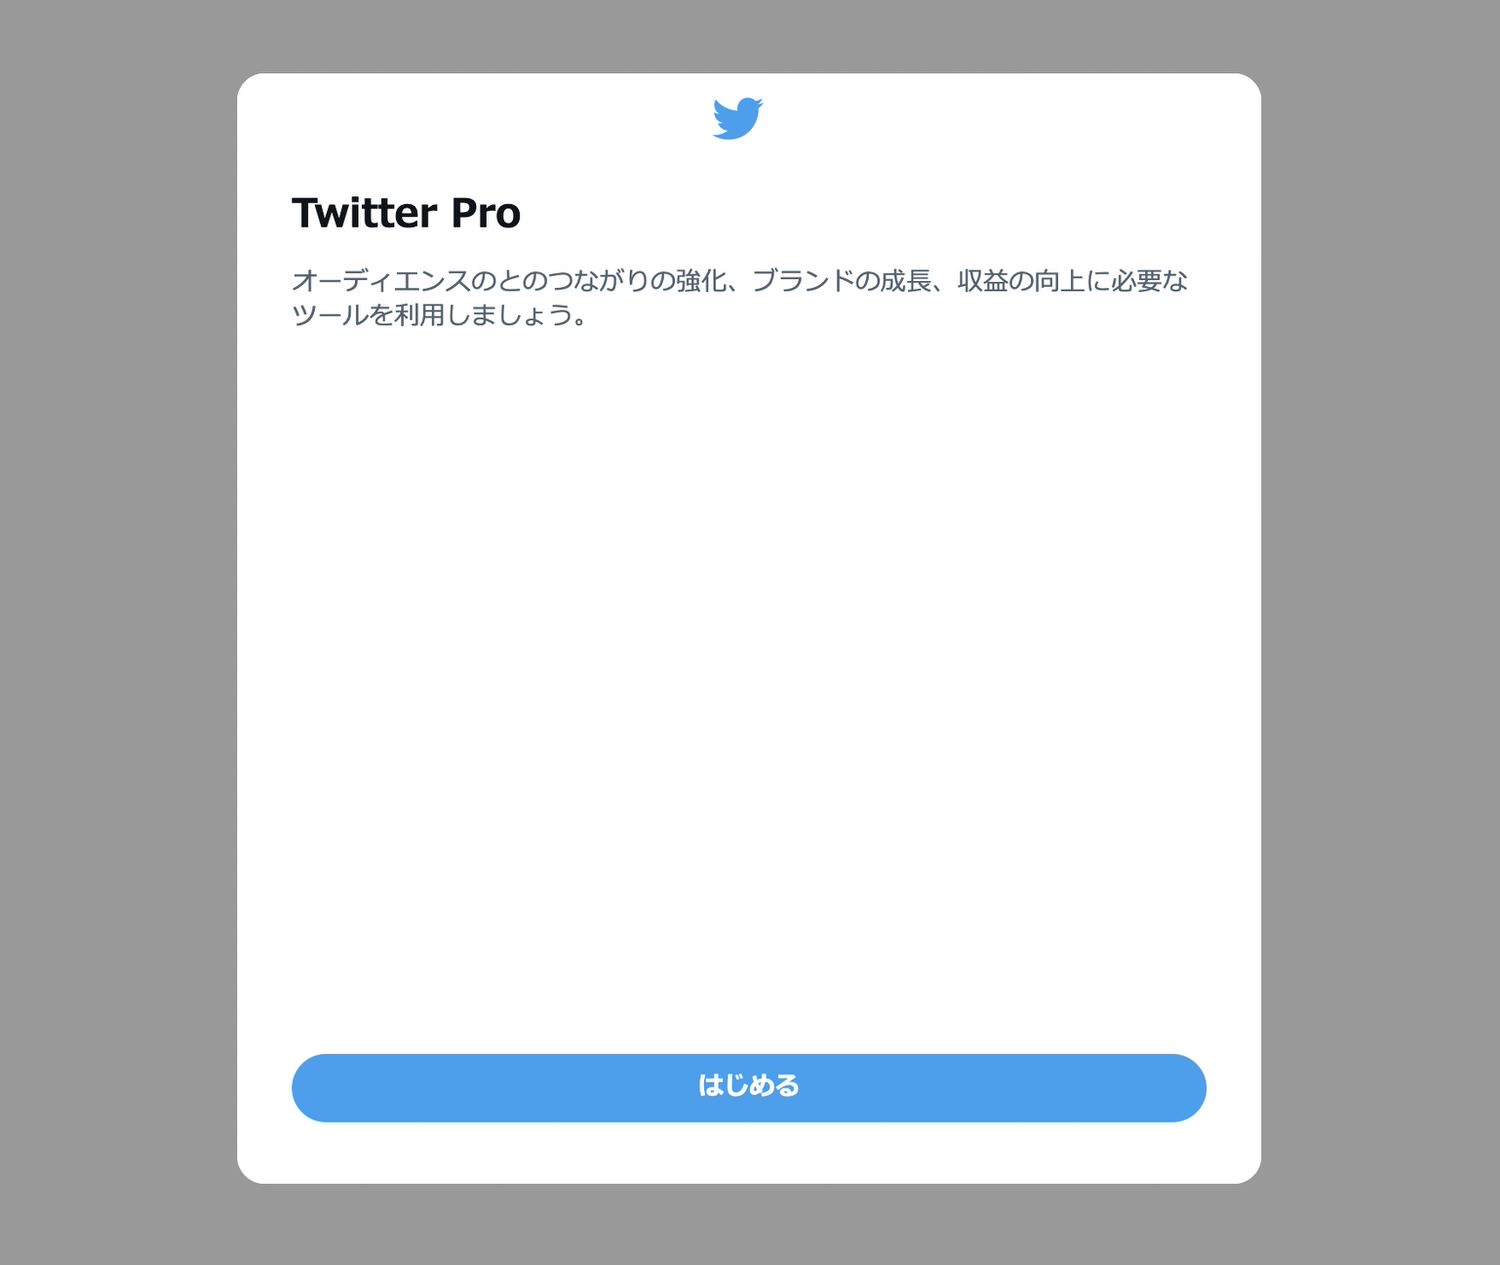 Twitter pro 01 04